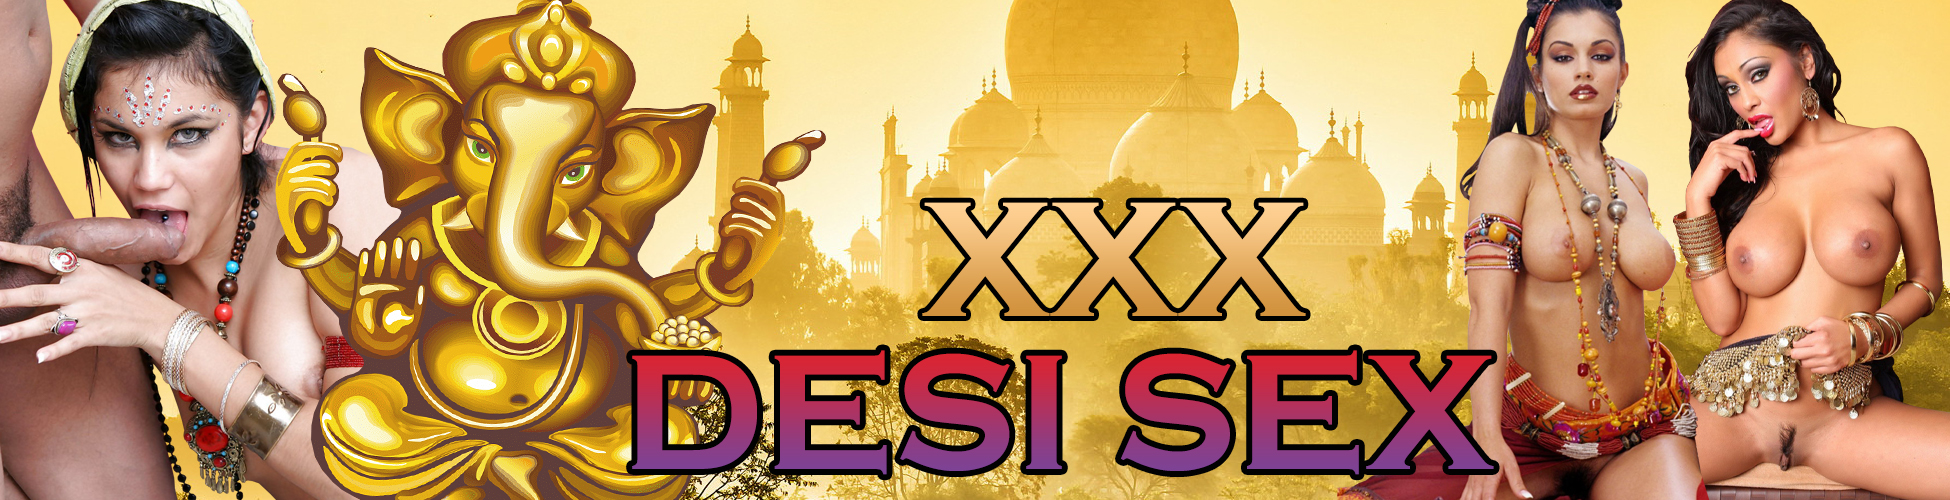 Dexi Sex Com - XXX Desi Sex â¤ï¸ï¸ Hot HD Hindi Porn